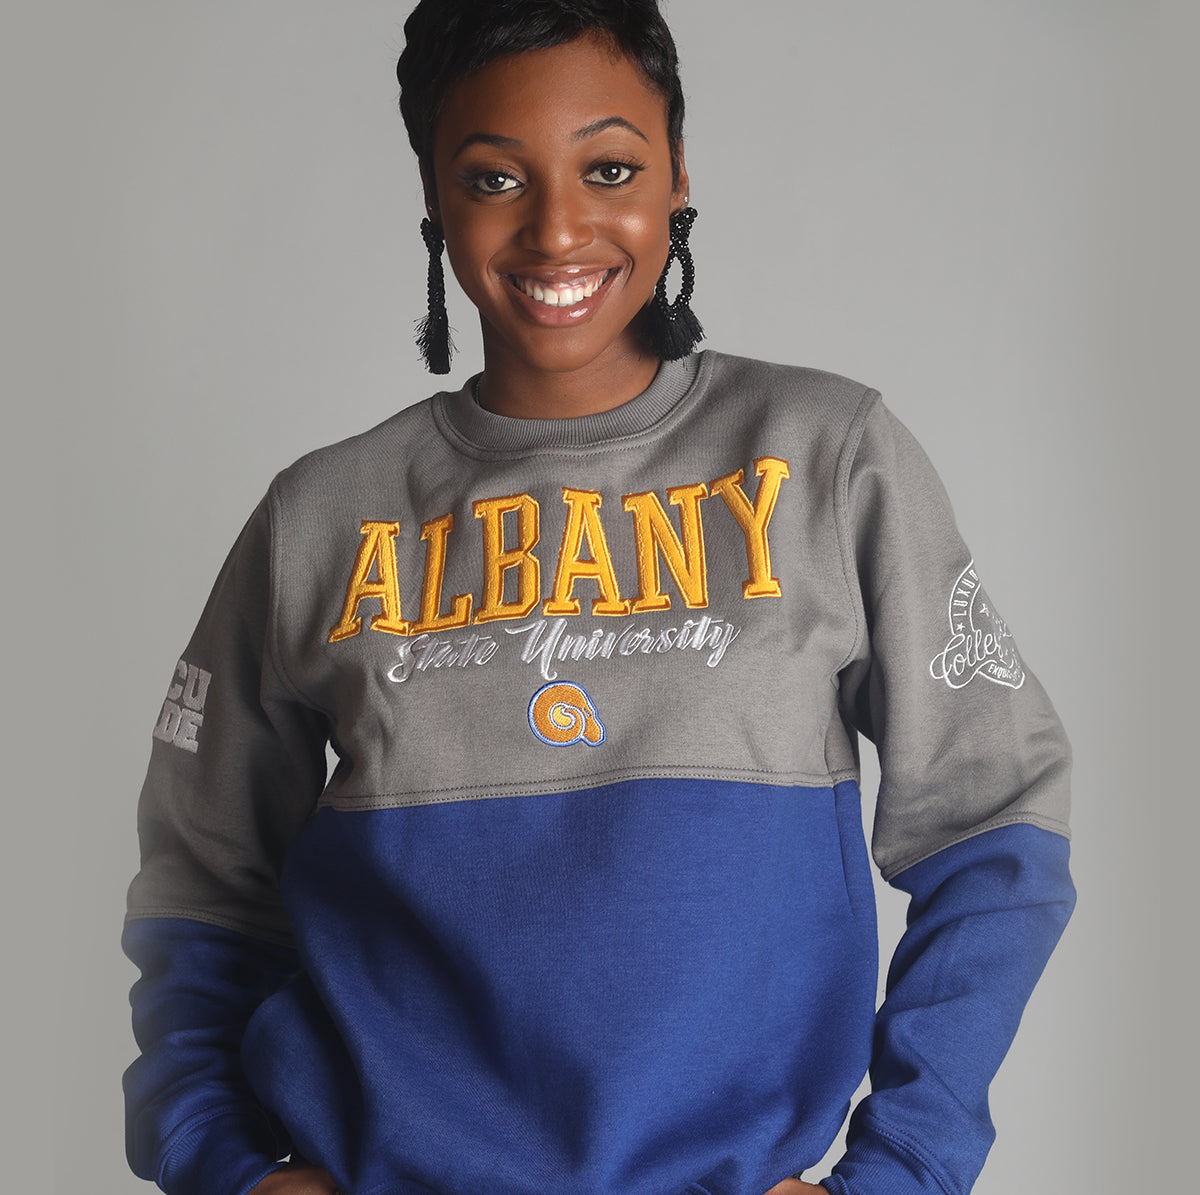 ALBANY ST. | The GRAD | GRAY & ROYAL Unisex Sweatshirt